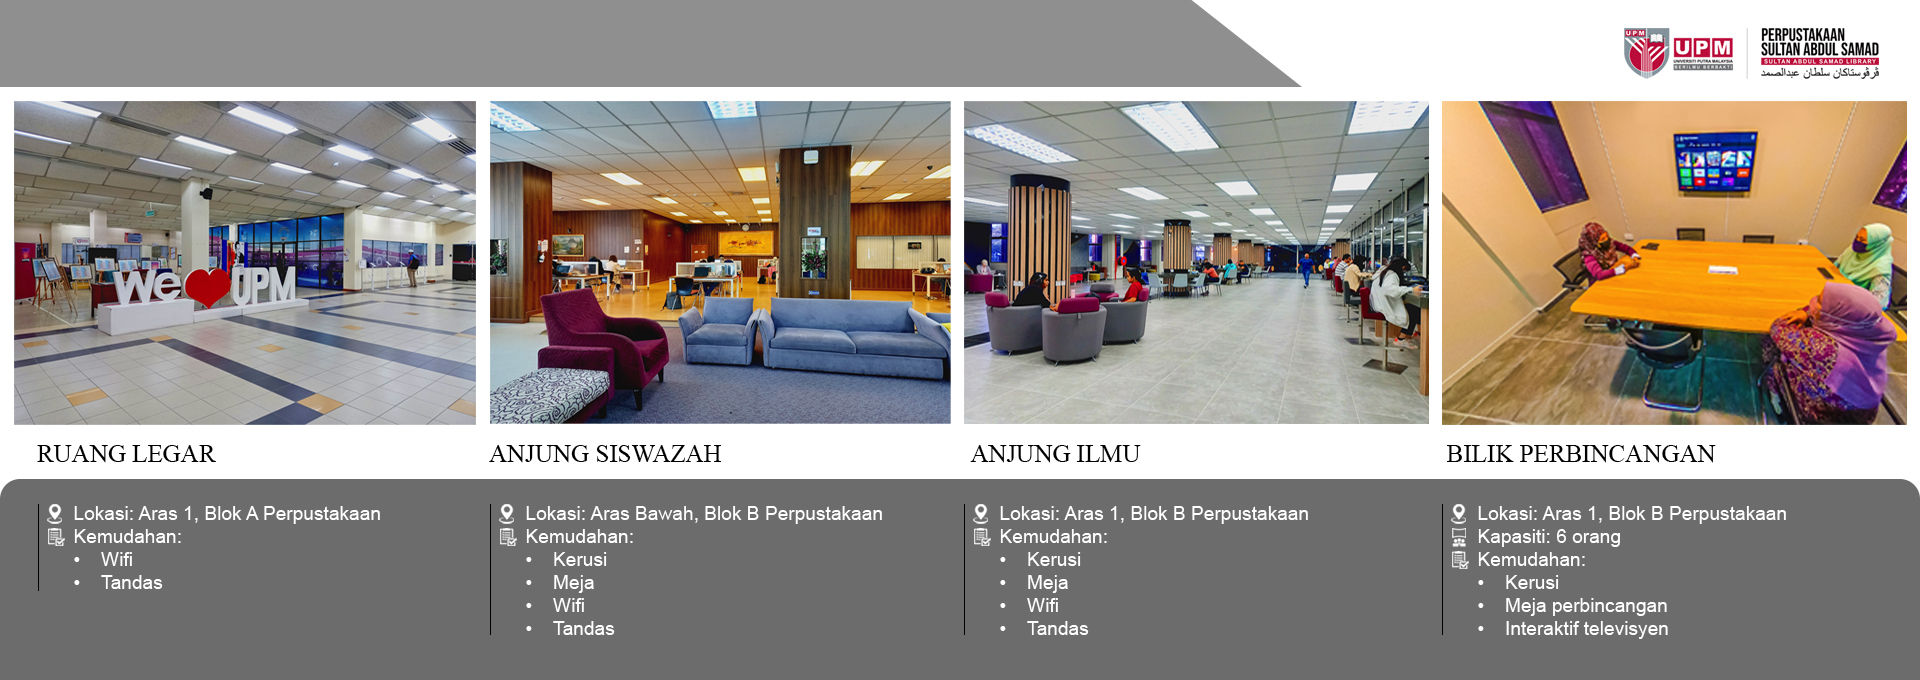 Promosi Ruang Perpustakaan Sultan Abdul Samad